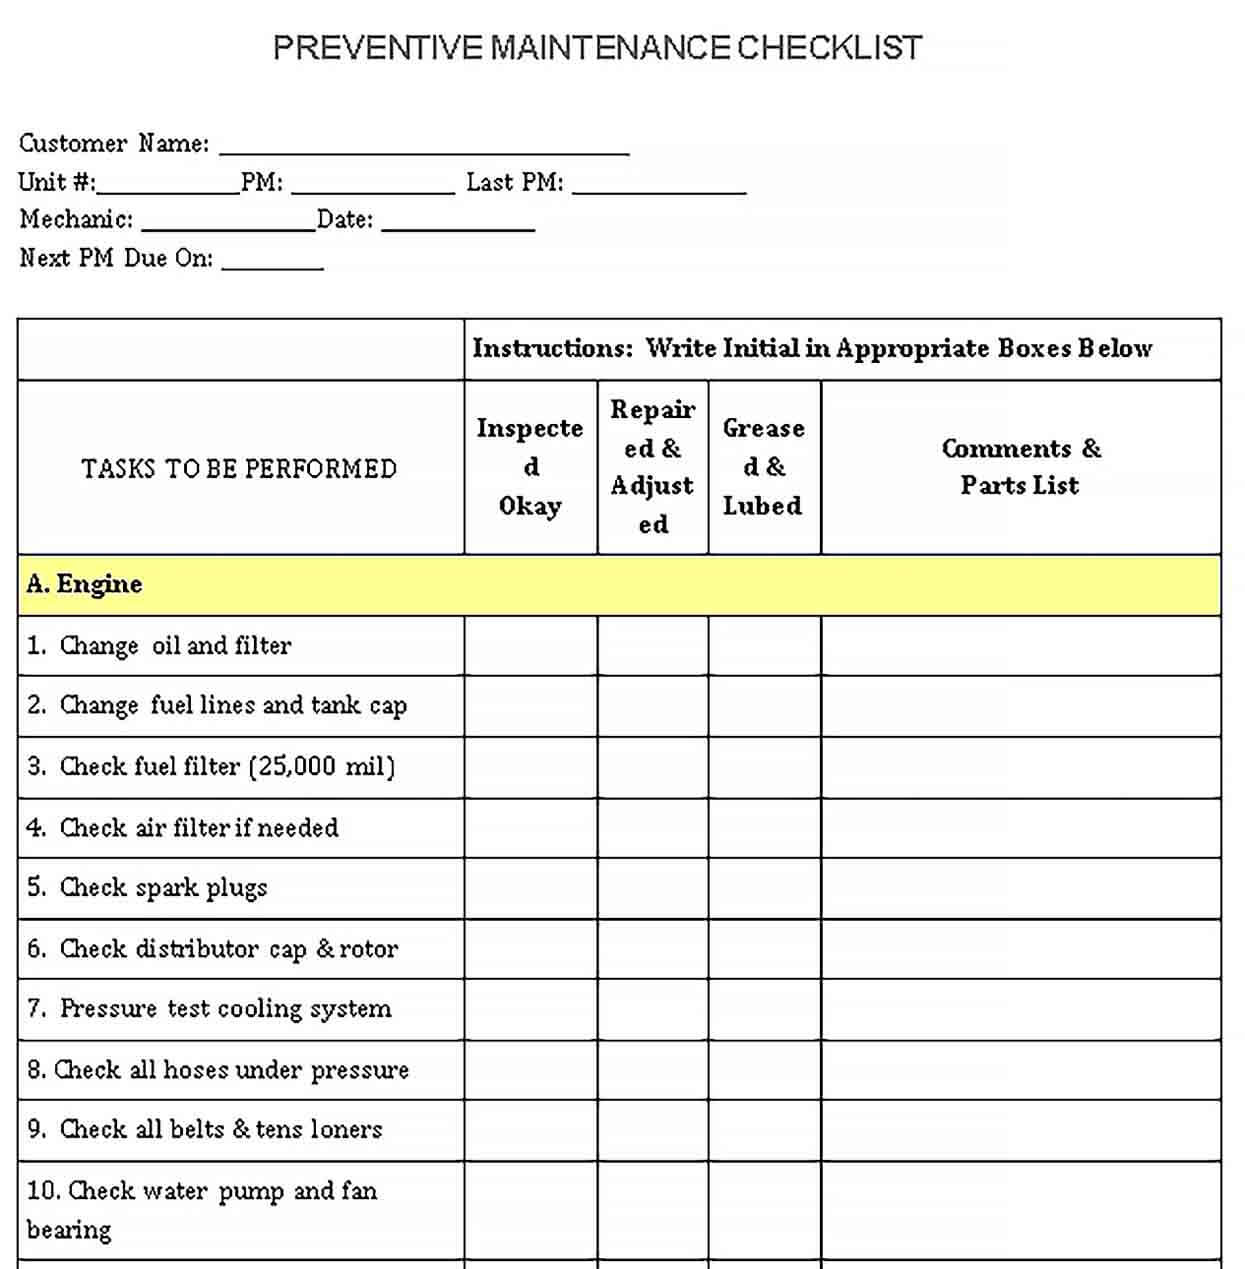 Sample sample pm checklist